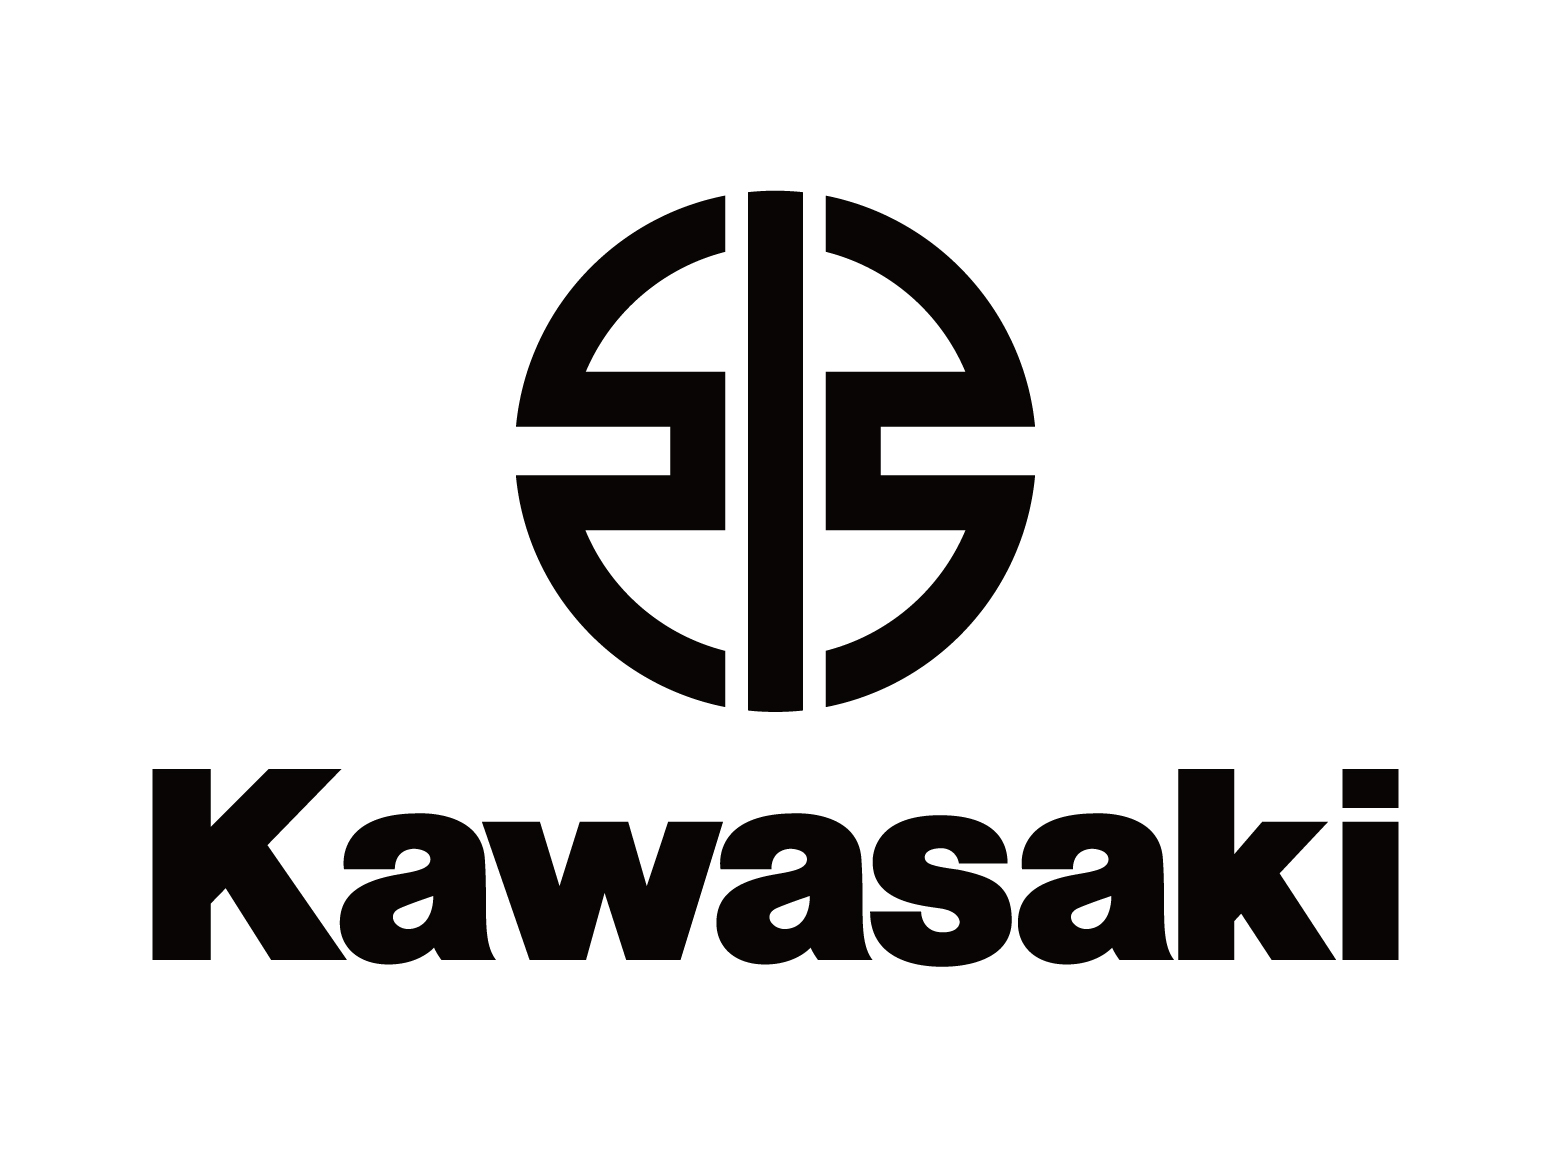 Запчасти Kawasaki